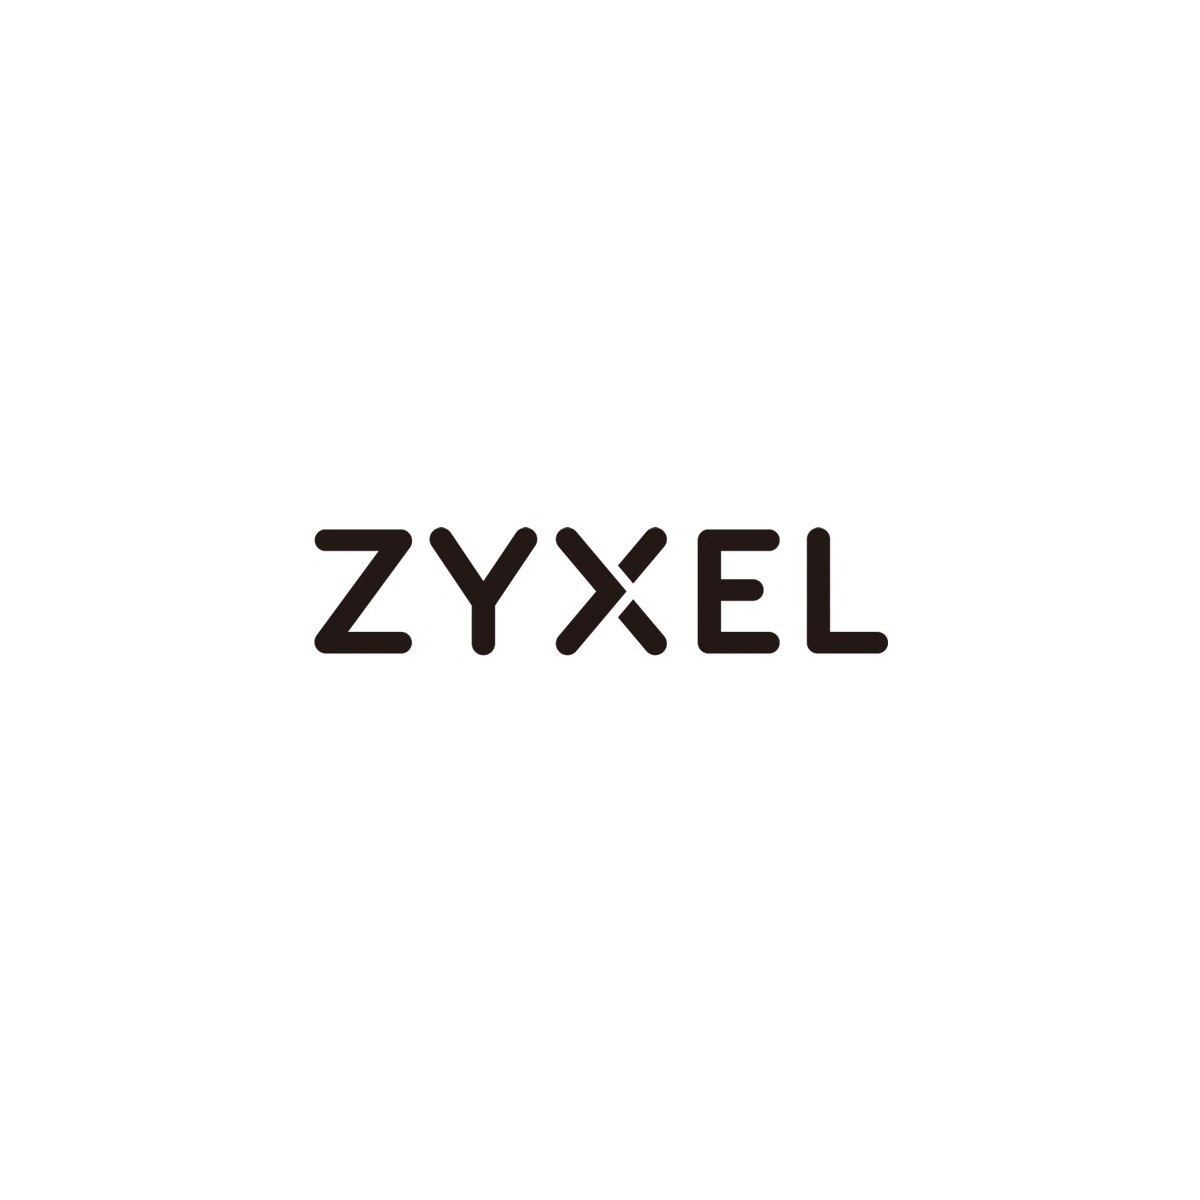 ZyXEL SECUEXTENDER-ZZ1Y05F - 1 license(s) - 1 year(s) - License